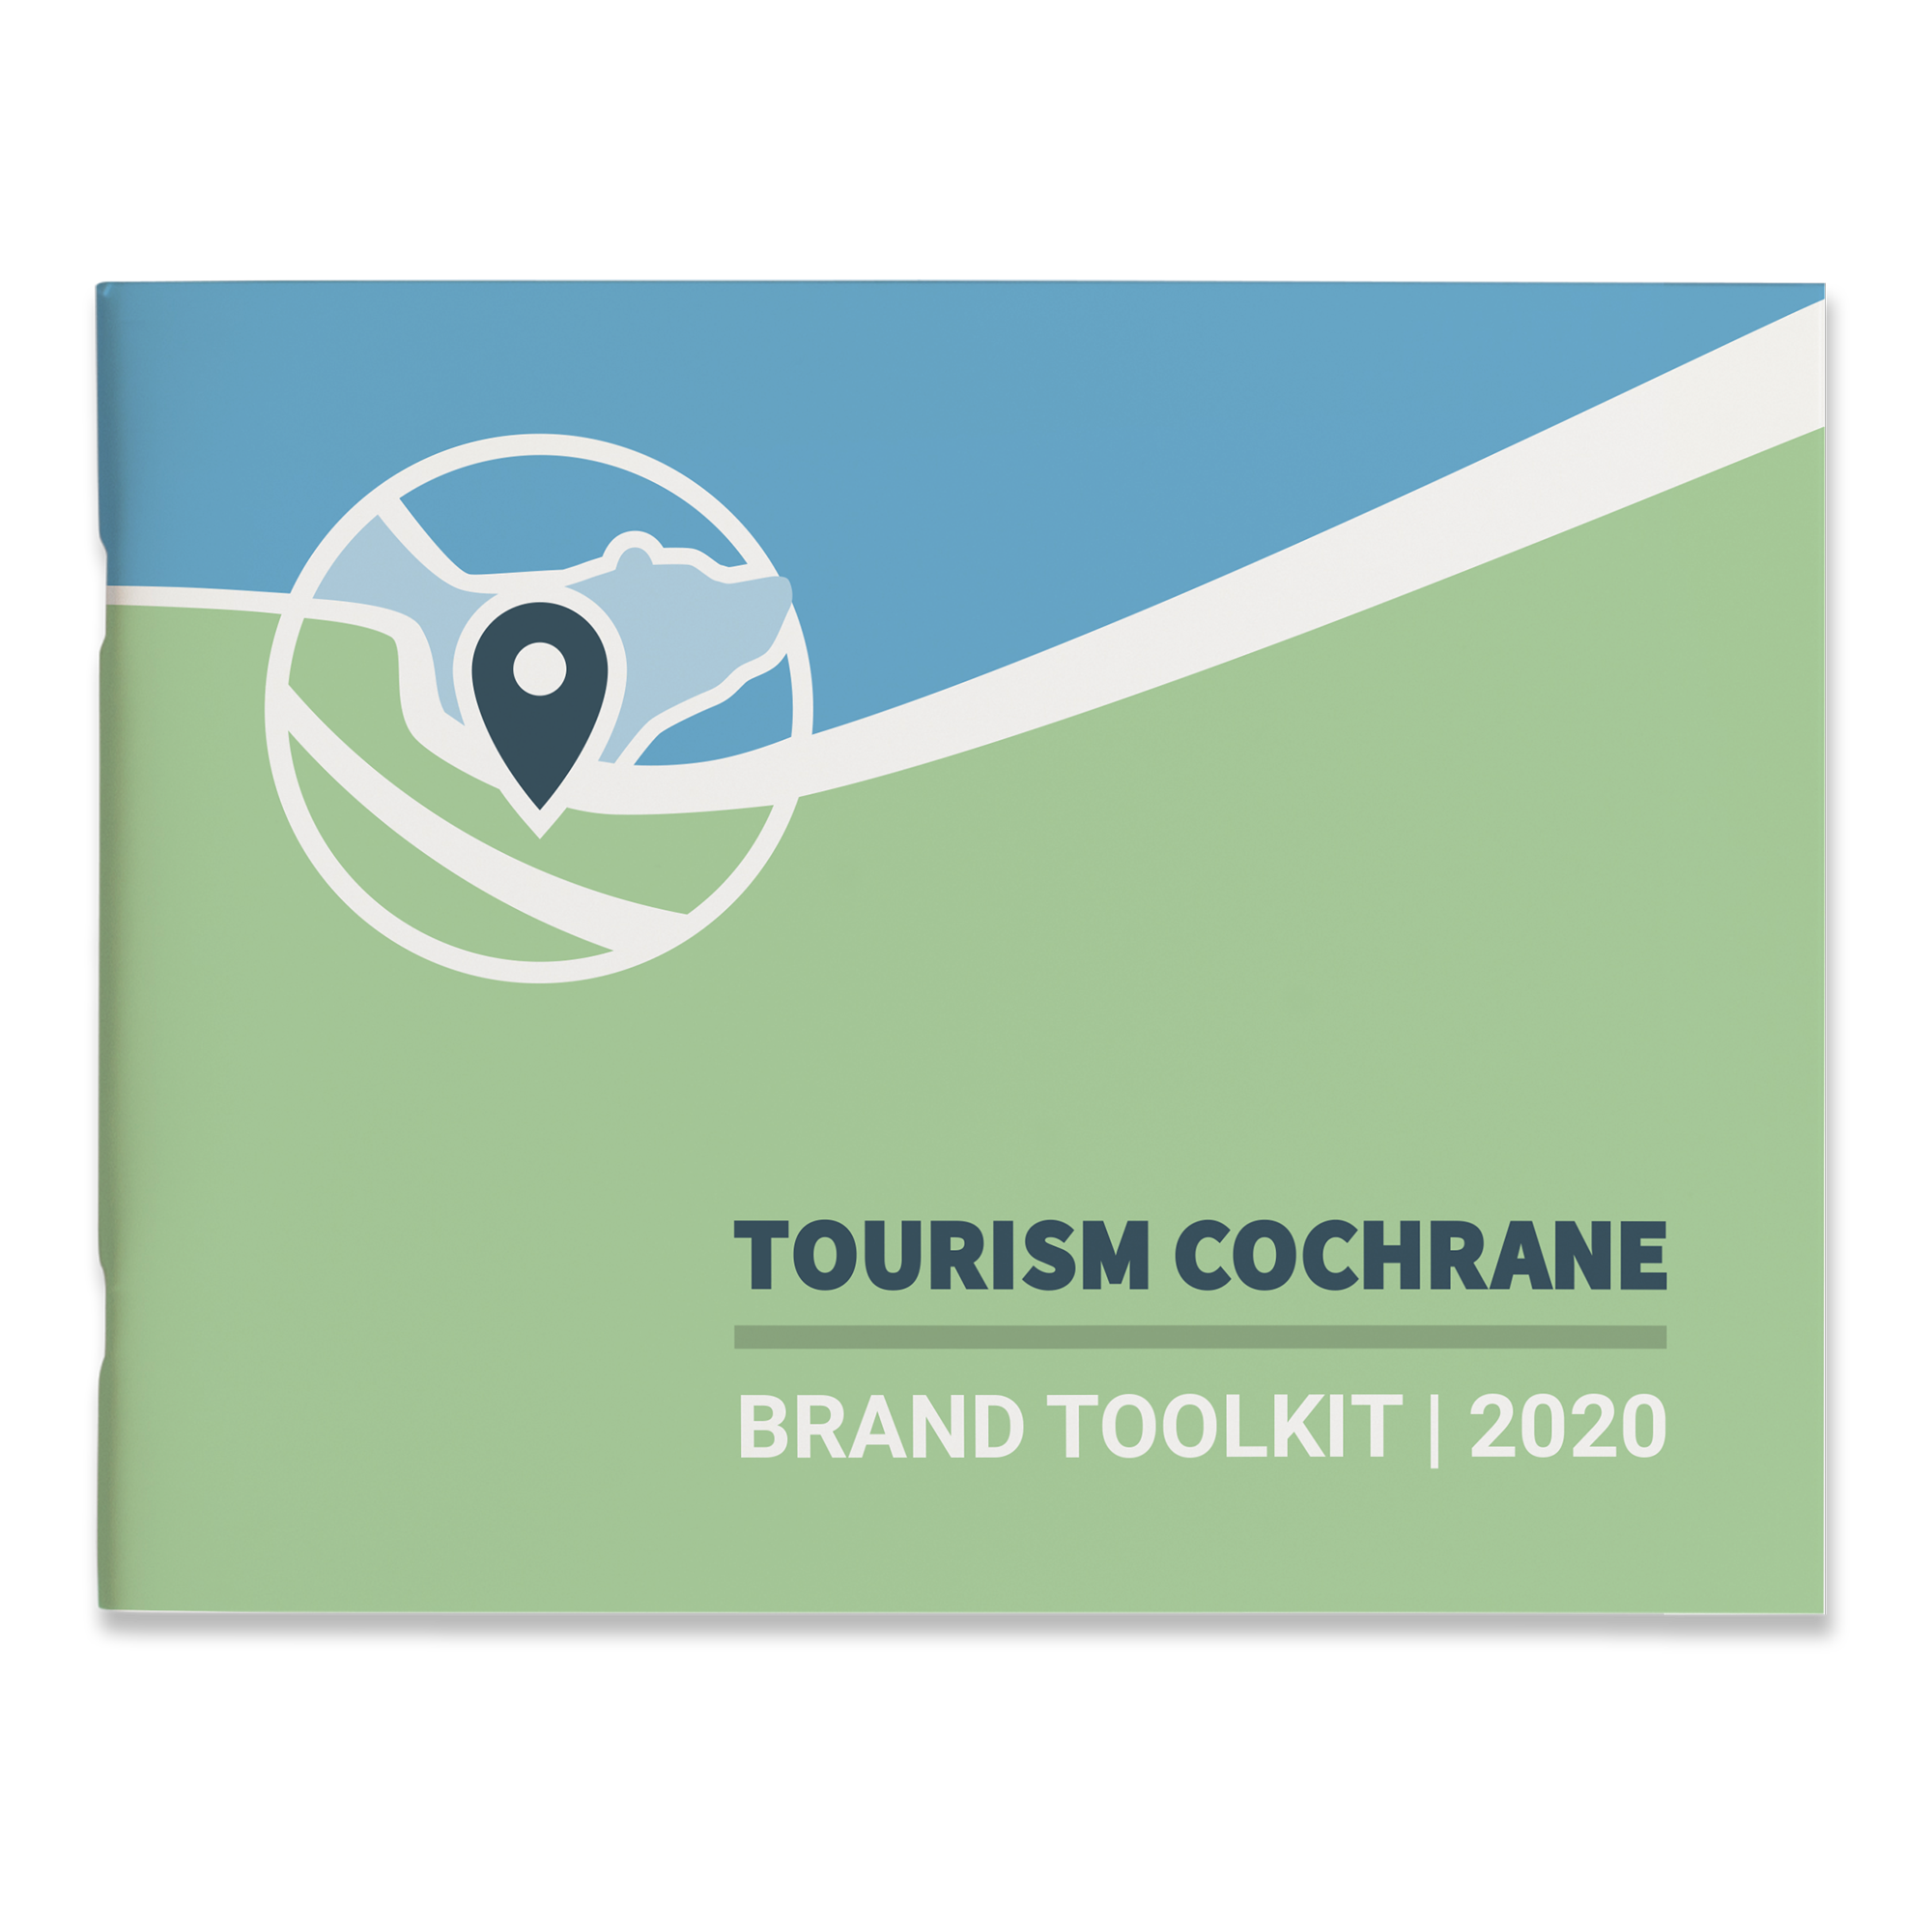 Tourism Cochrane brand guide cover